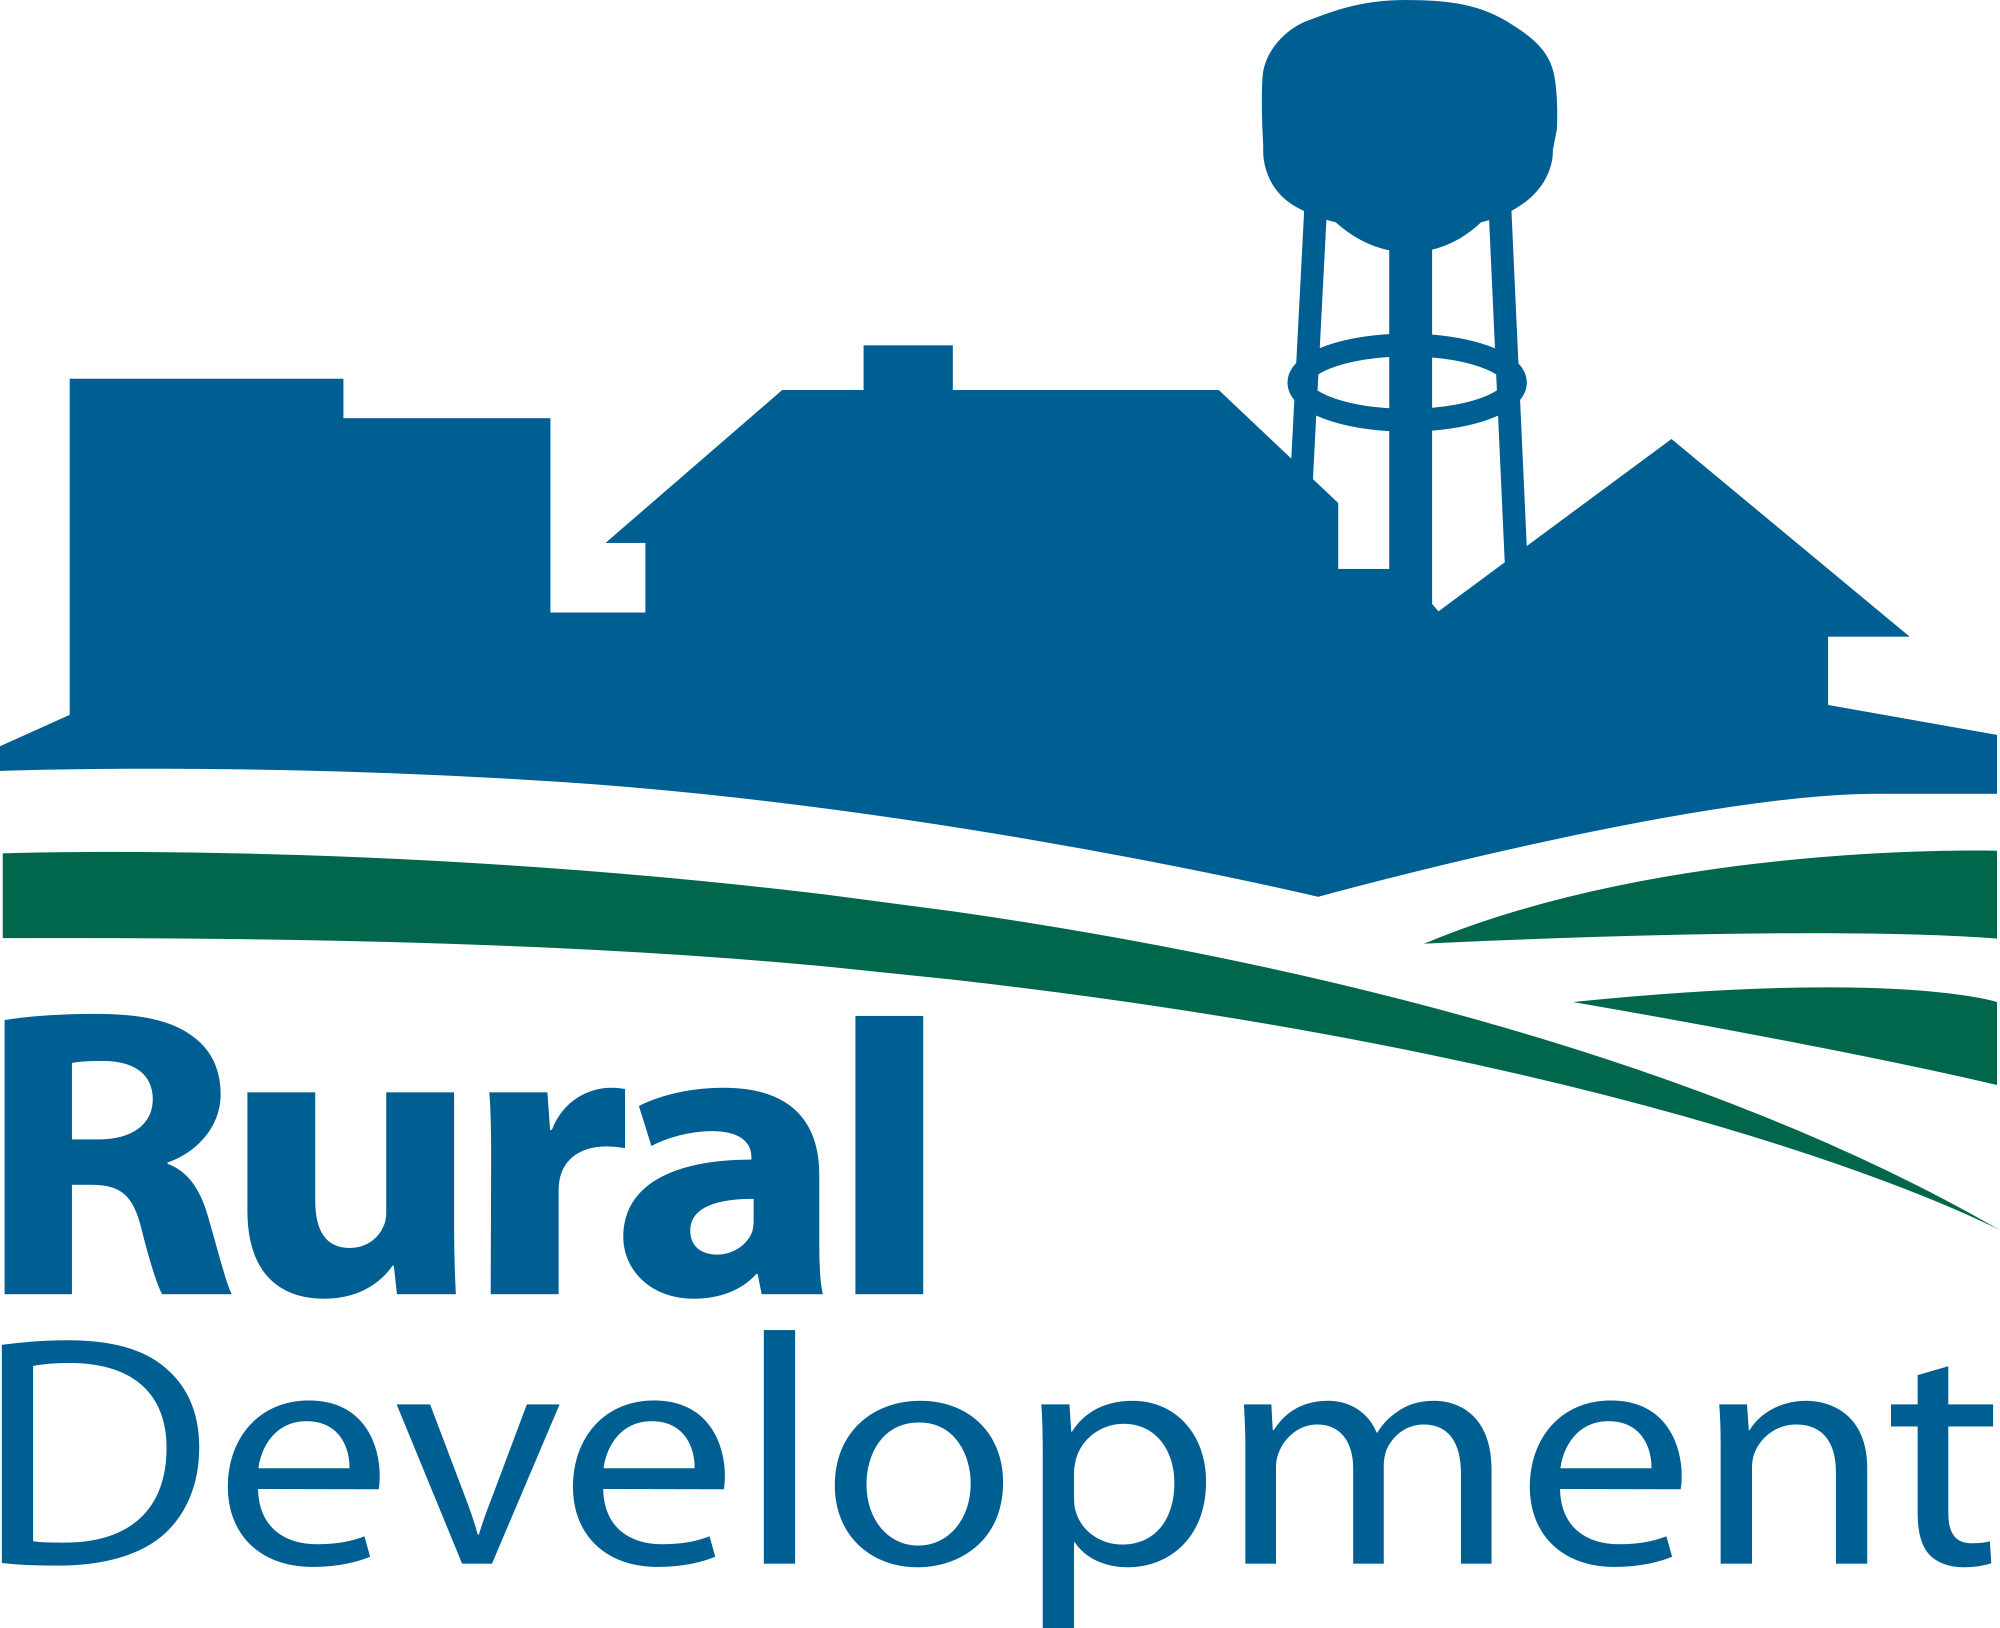 USDA Logo - File:USDA-RuralDevelopment-Logo.svg - Wikimedia Commons